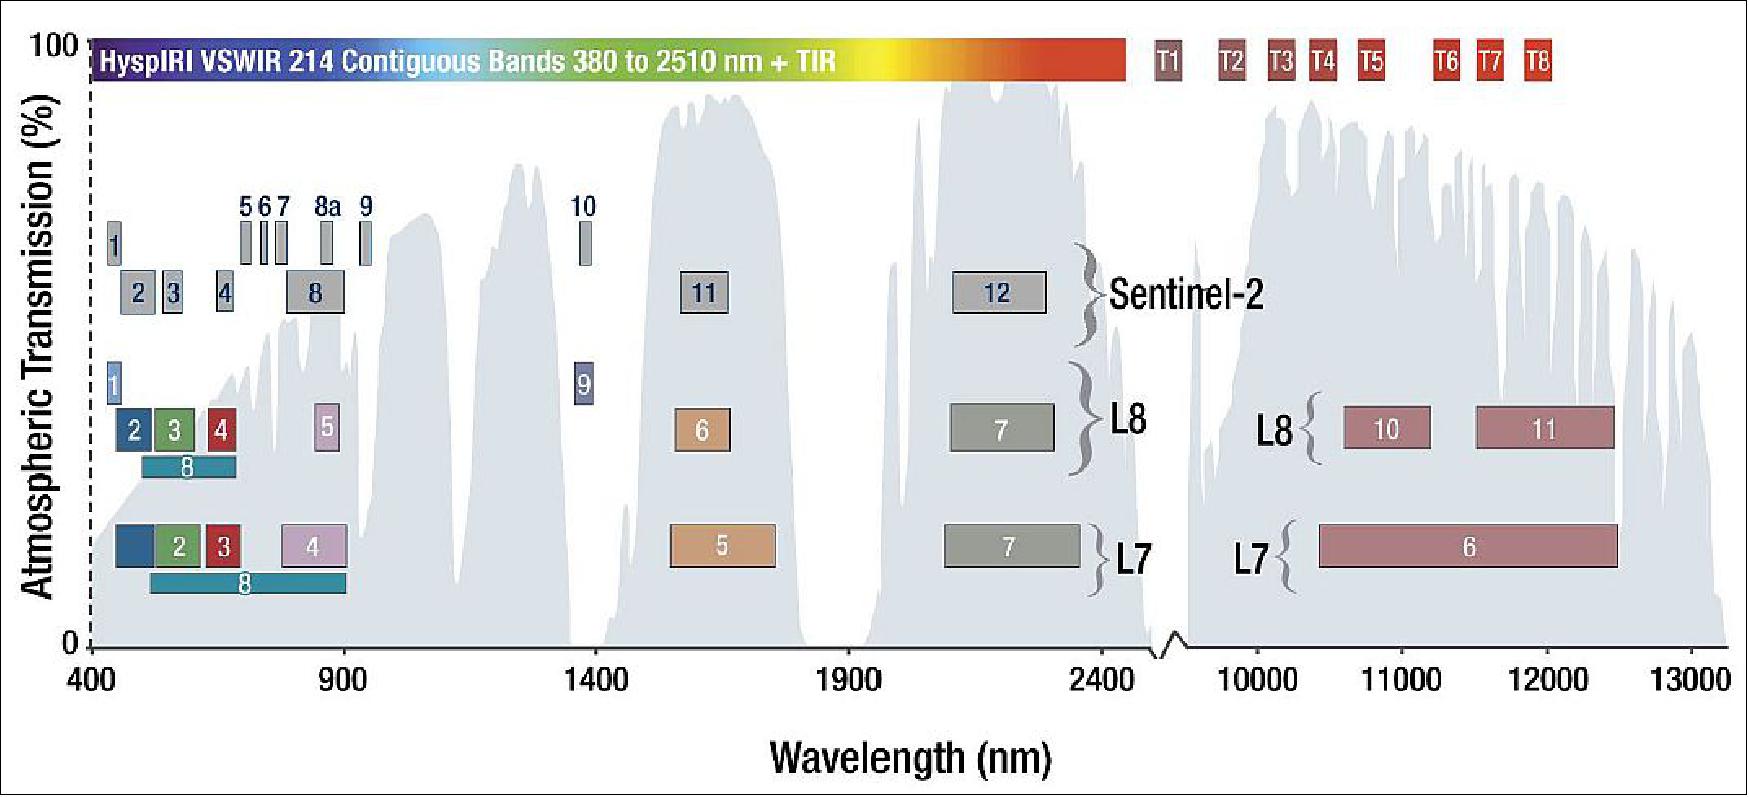 Figure 12: Overview of spectral band coverage in various missions (HyspIRI, Sentinel-2 of ESA, Landsat-8 and Landsat-7 (image credit: NASA)